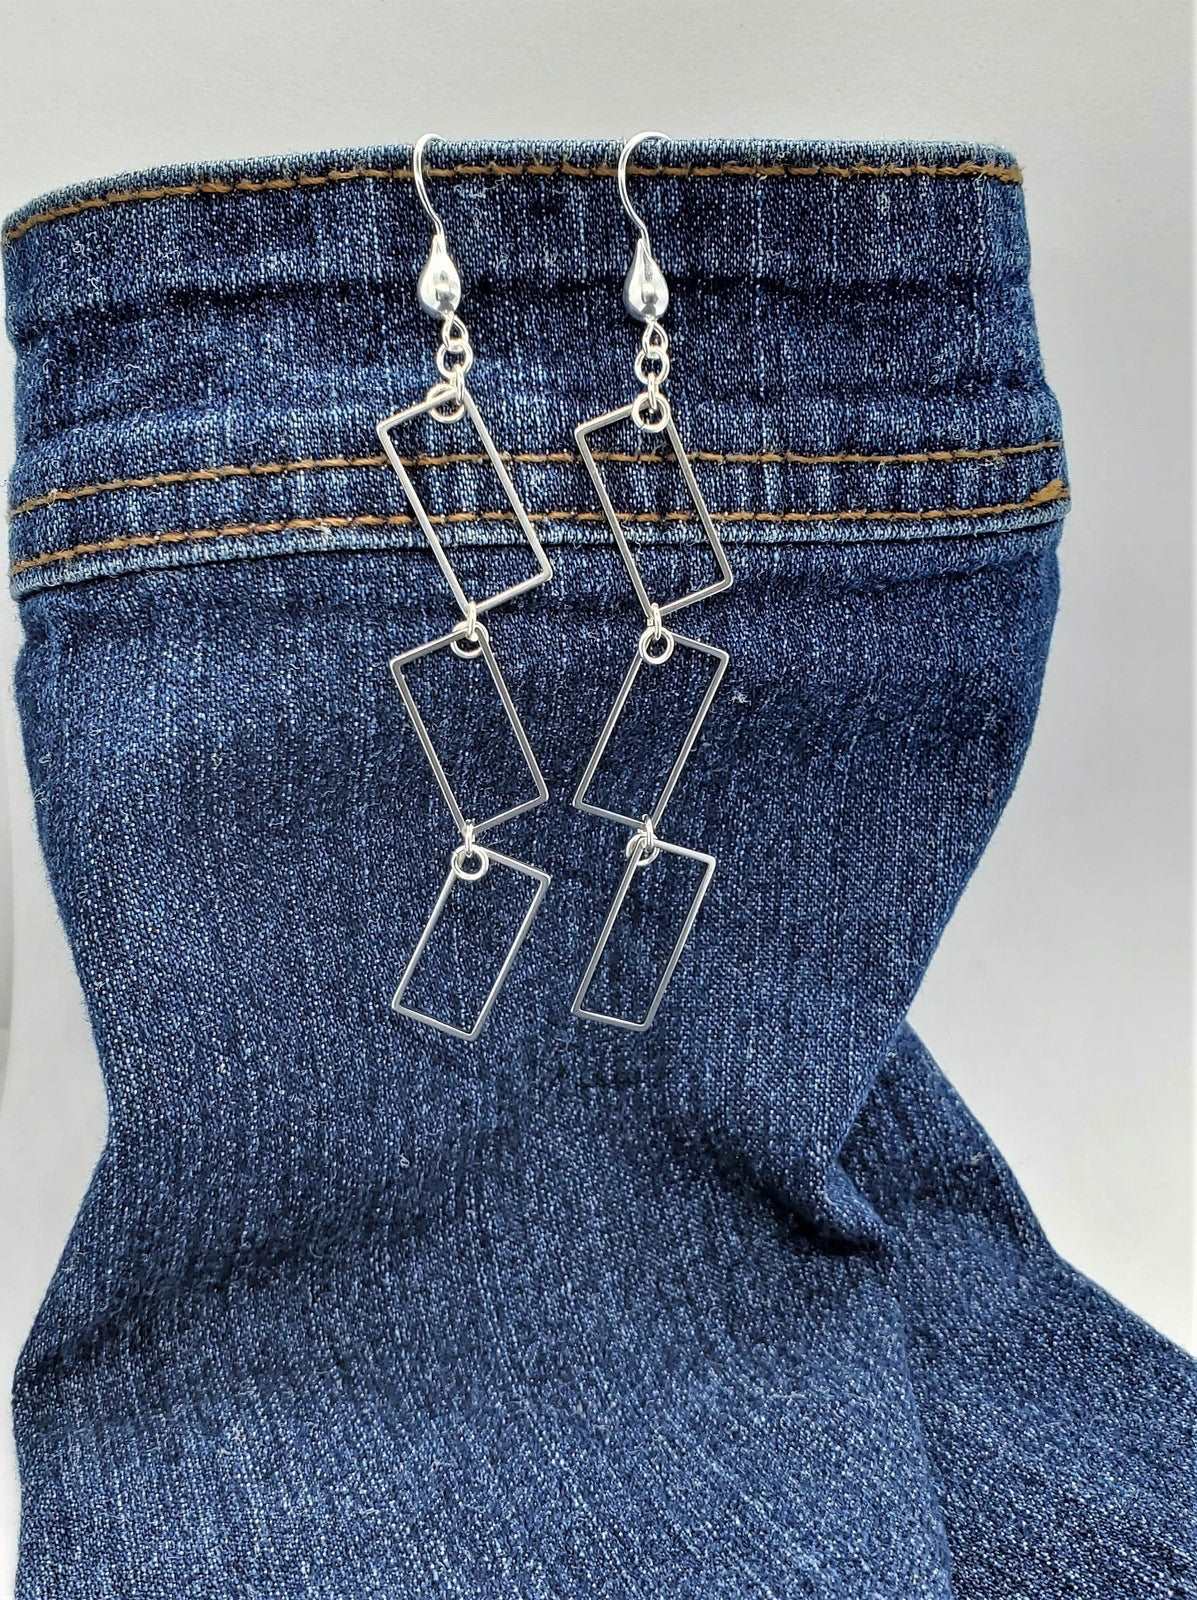 Photo of earrings on jeans, handmade earrings, Rectangle Dangle Earrings, earrings by Jiana Deon